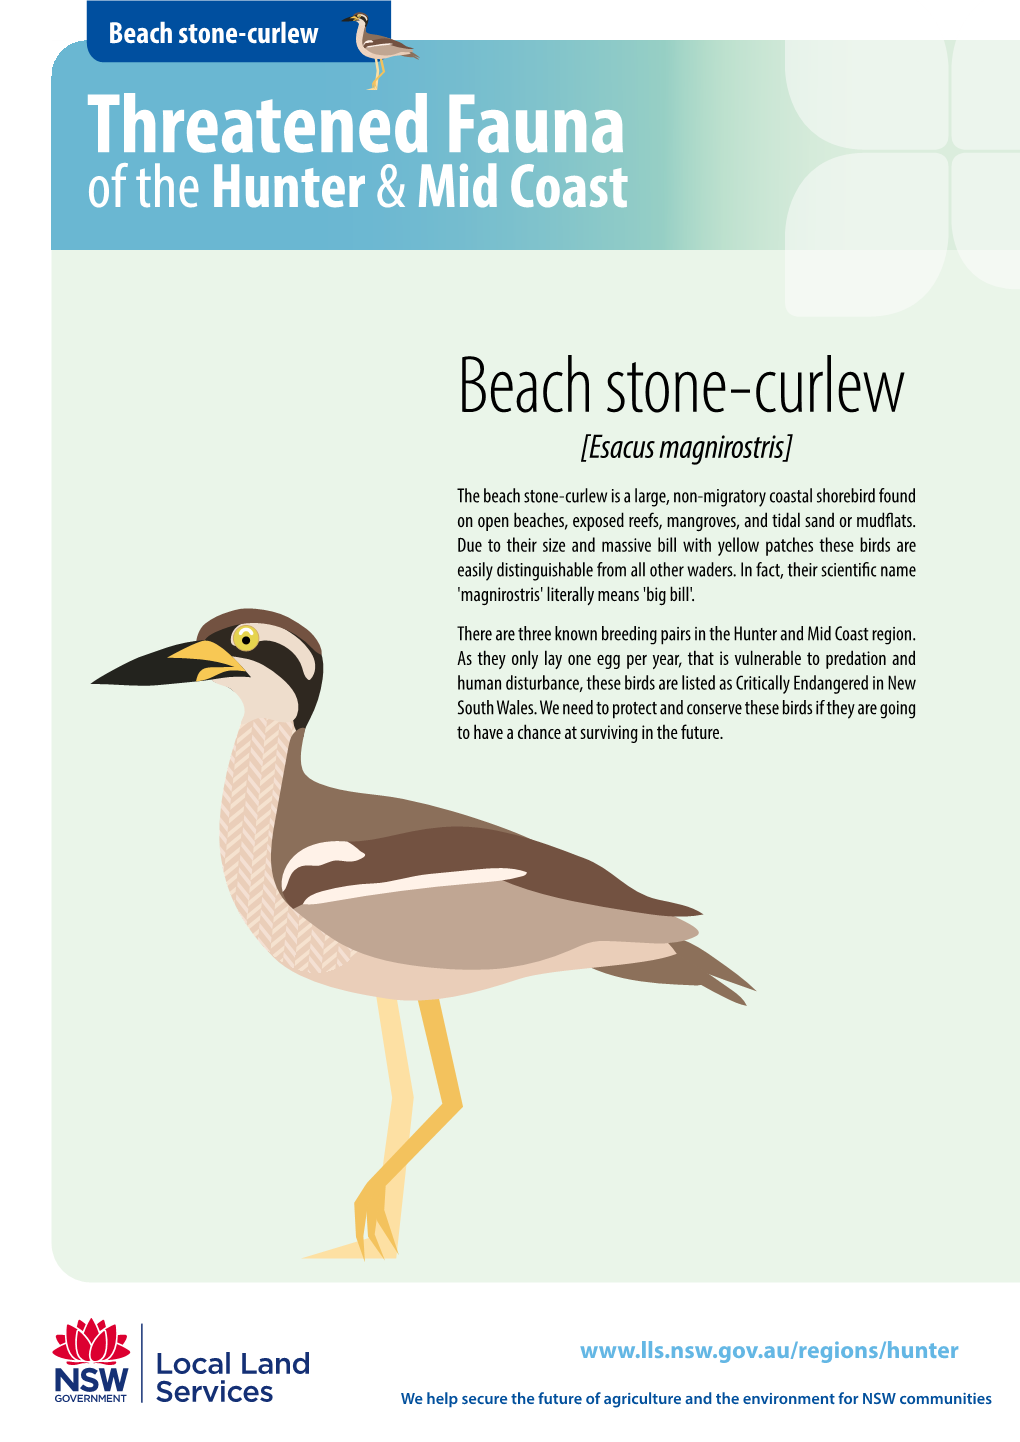 Beach Stone-Curlew Threatened Fauna of the Hunter & Mid Coast